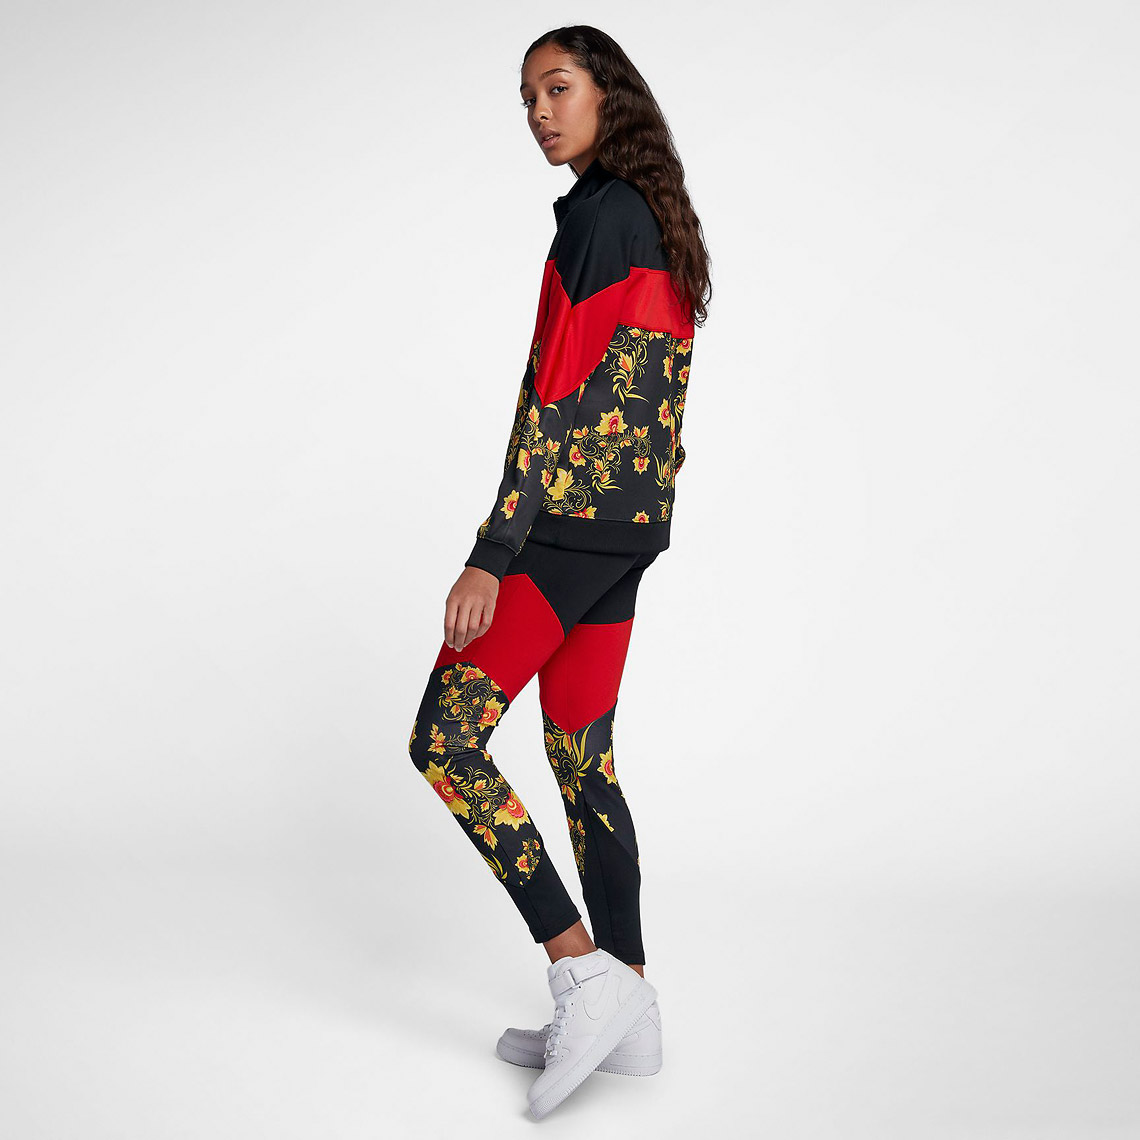 sportswear-floral-womens-printed-leggings-EvX2Mbb